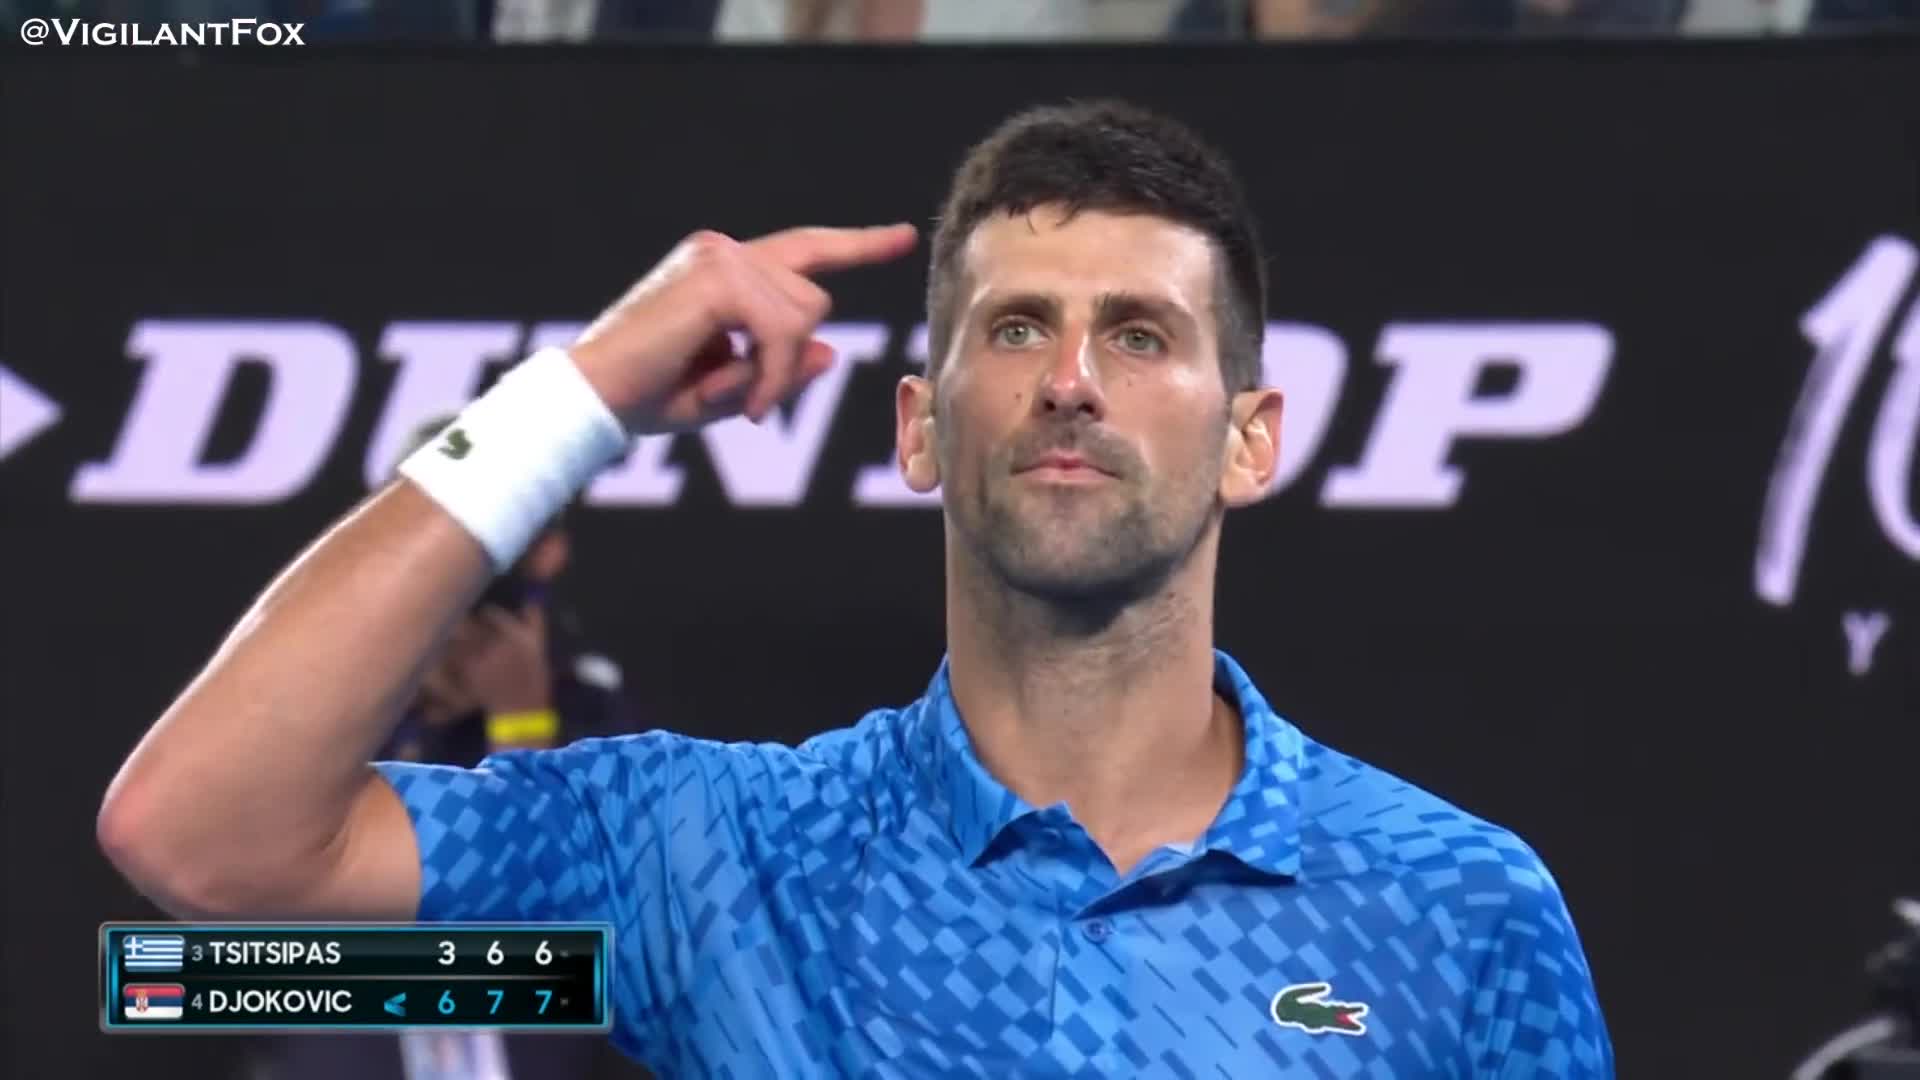 Novak WINS 2023 Australian Open after being deported in 2022 [VIDEO]